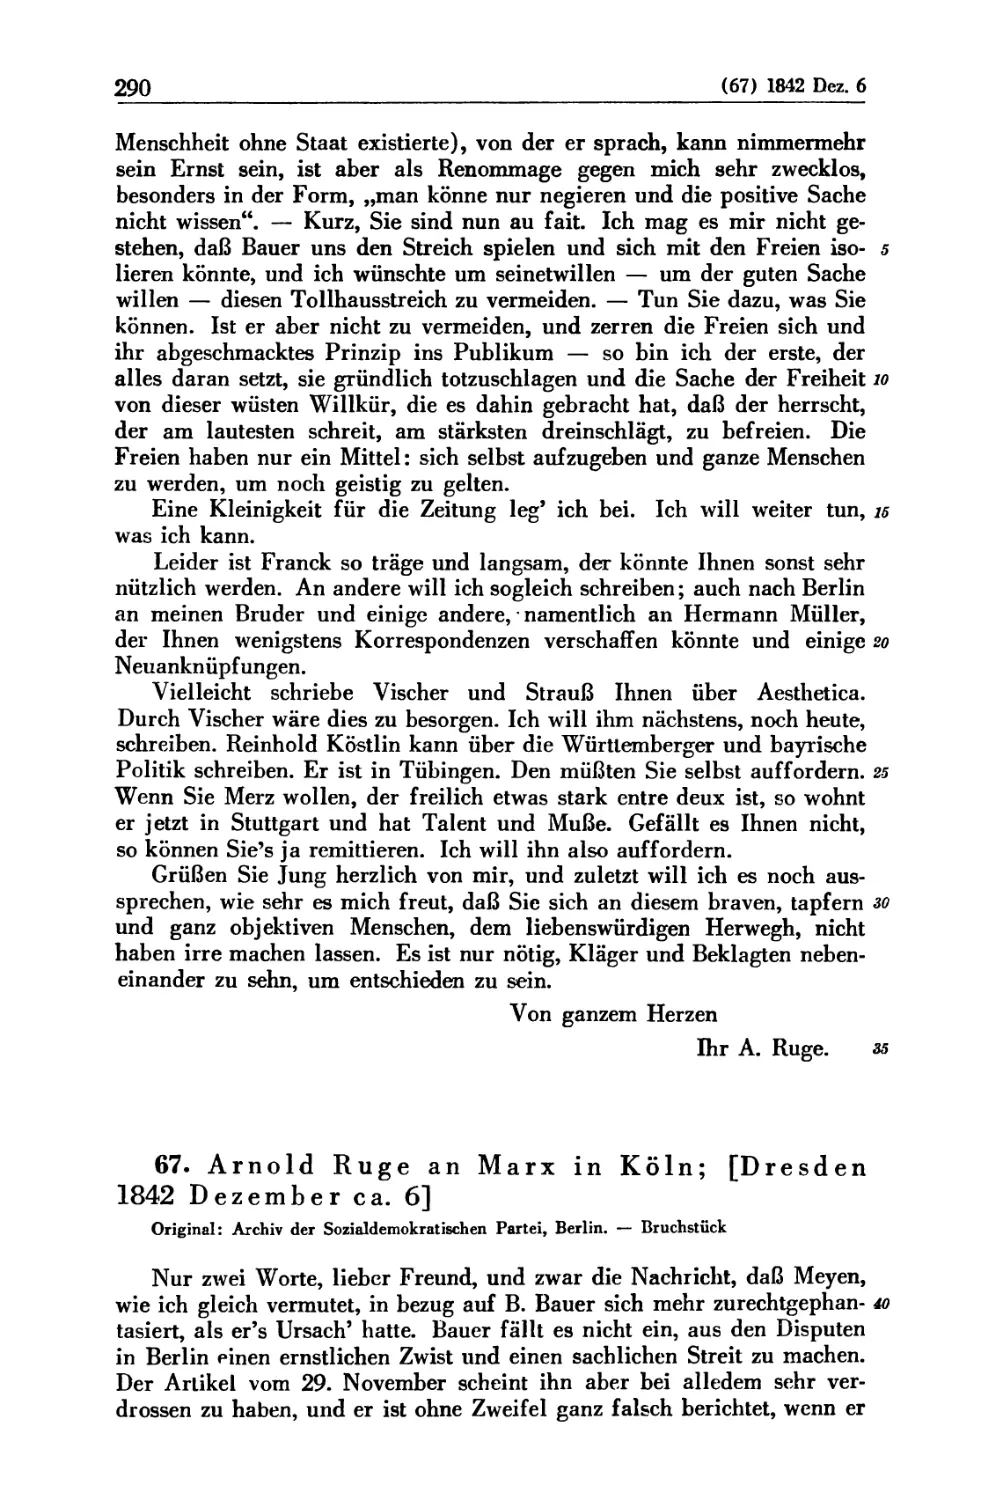 67. Arnold Ruge an Marx in Köln; [Dresden 1842 Dezember ca. 6]